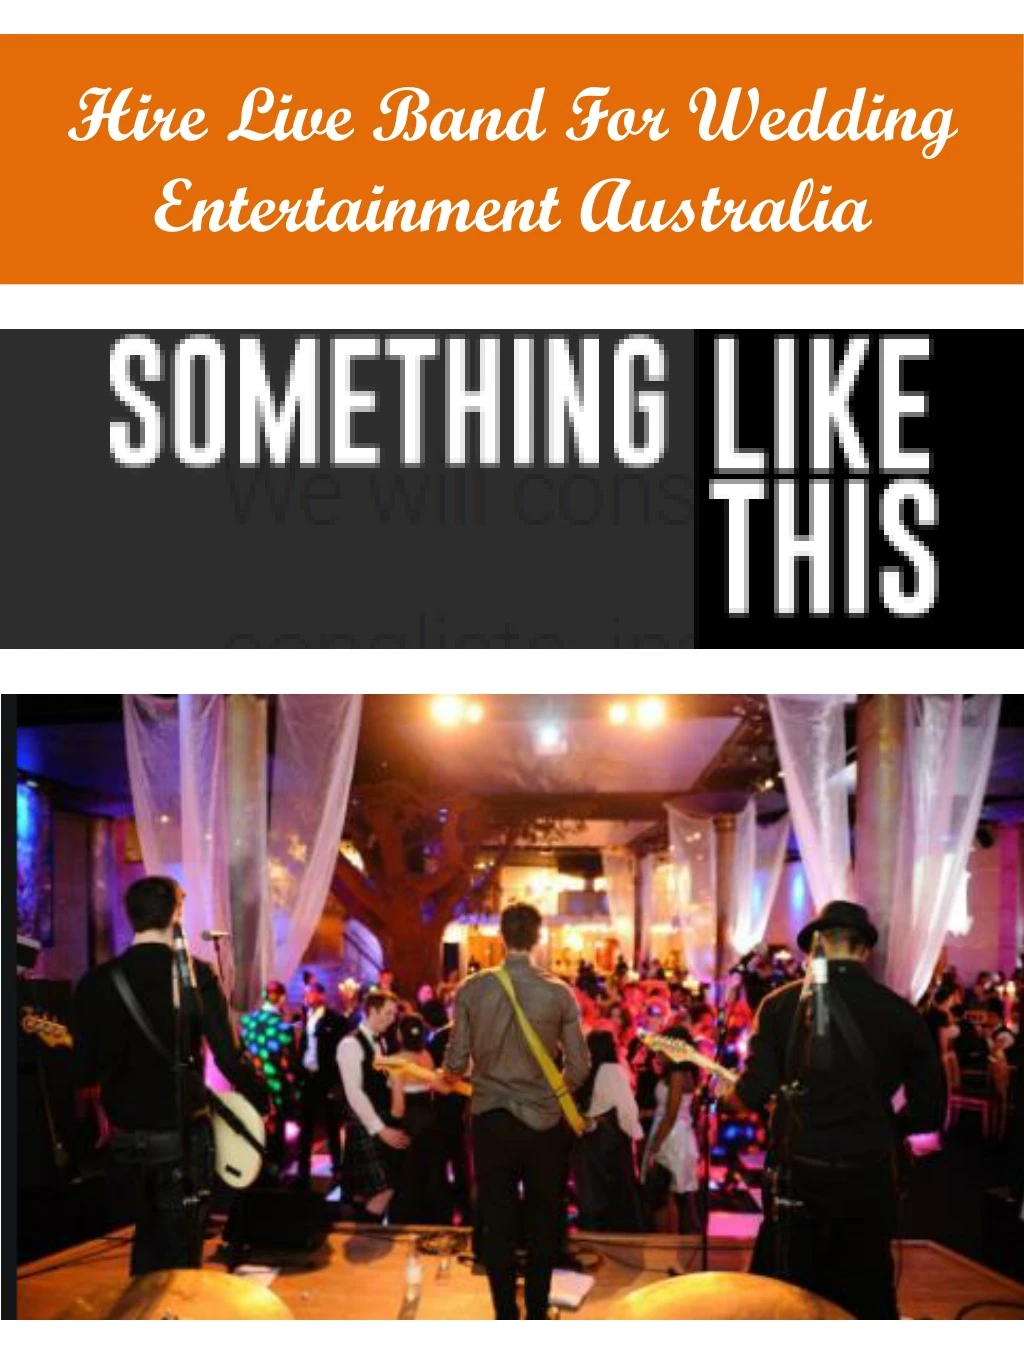 hire live band for wedding entertainment australia